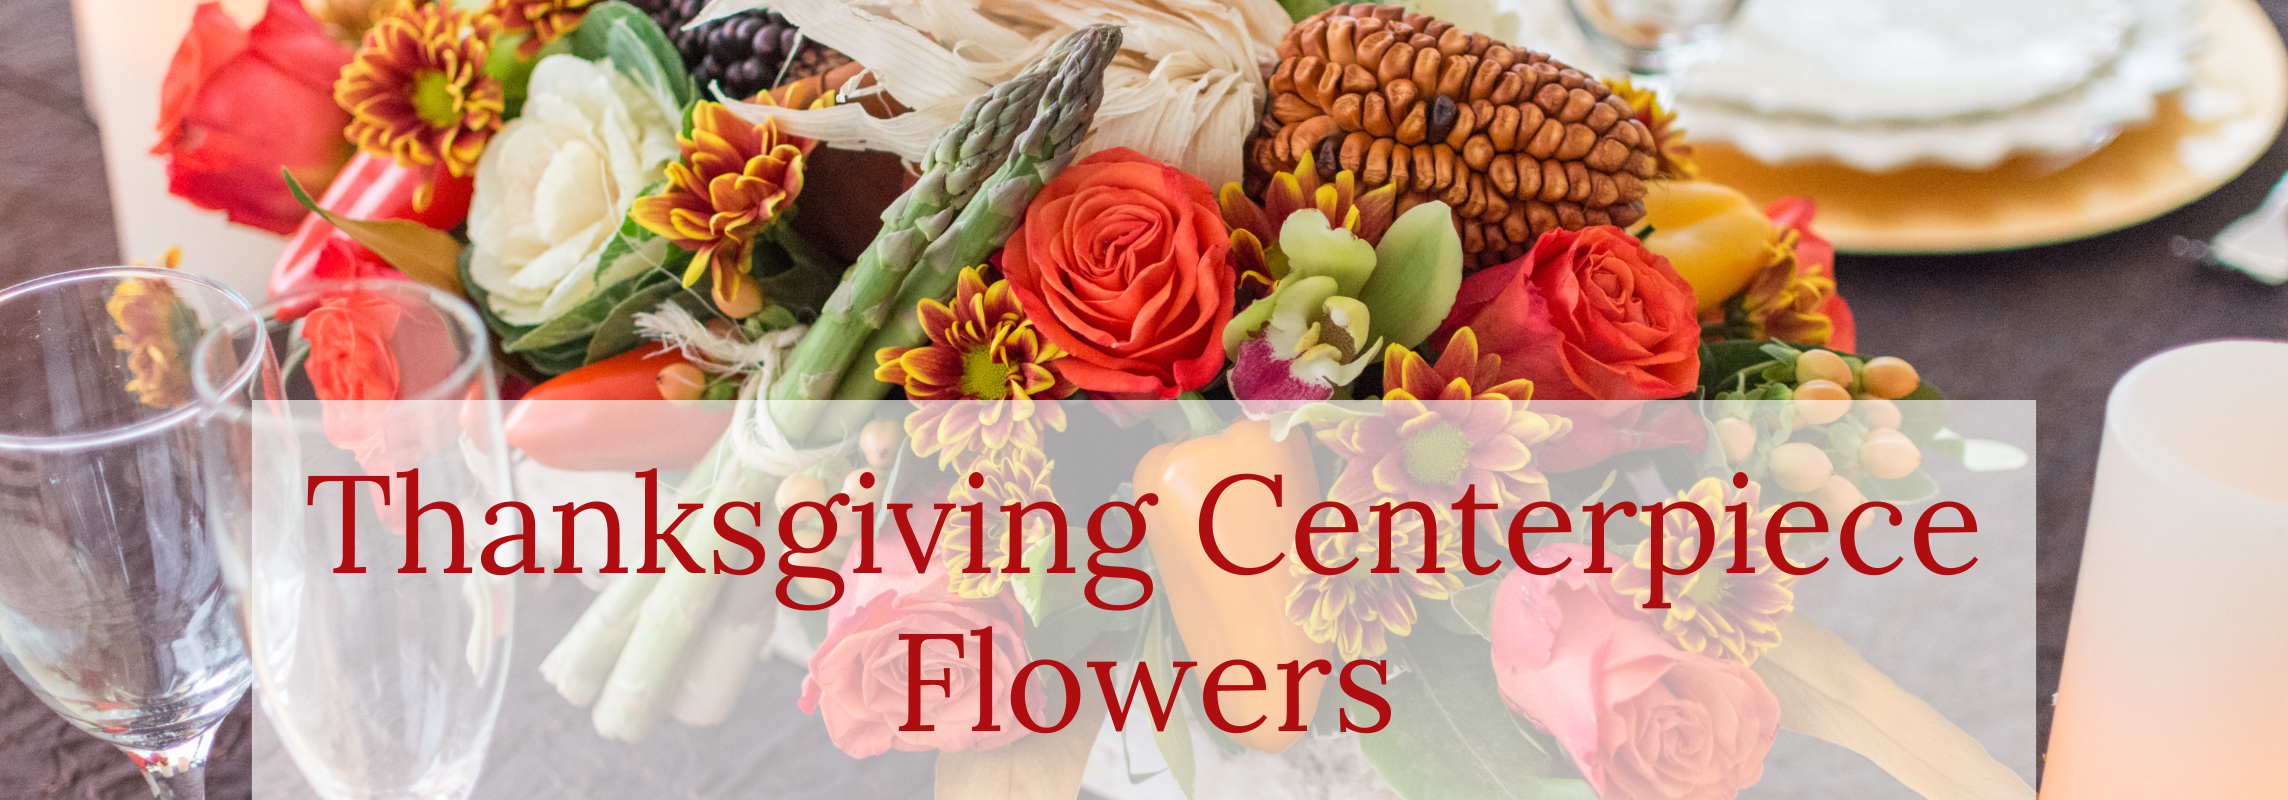 Thanksgiving centerpiece flowers